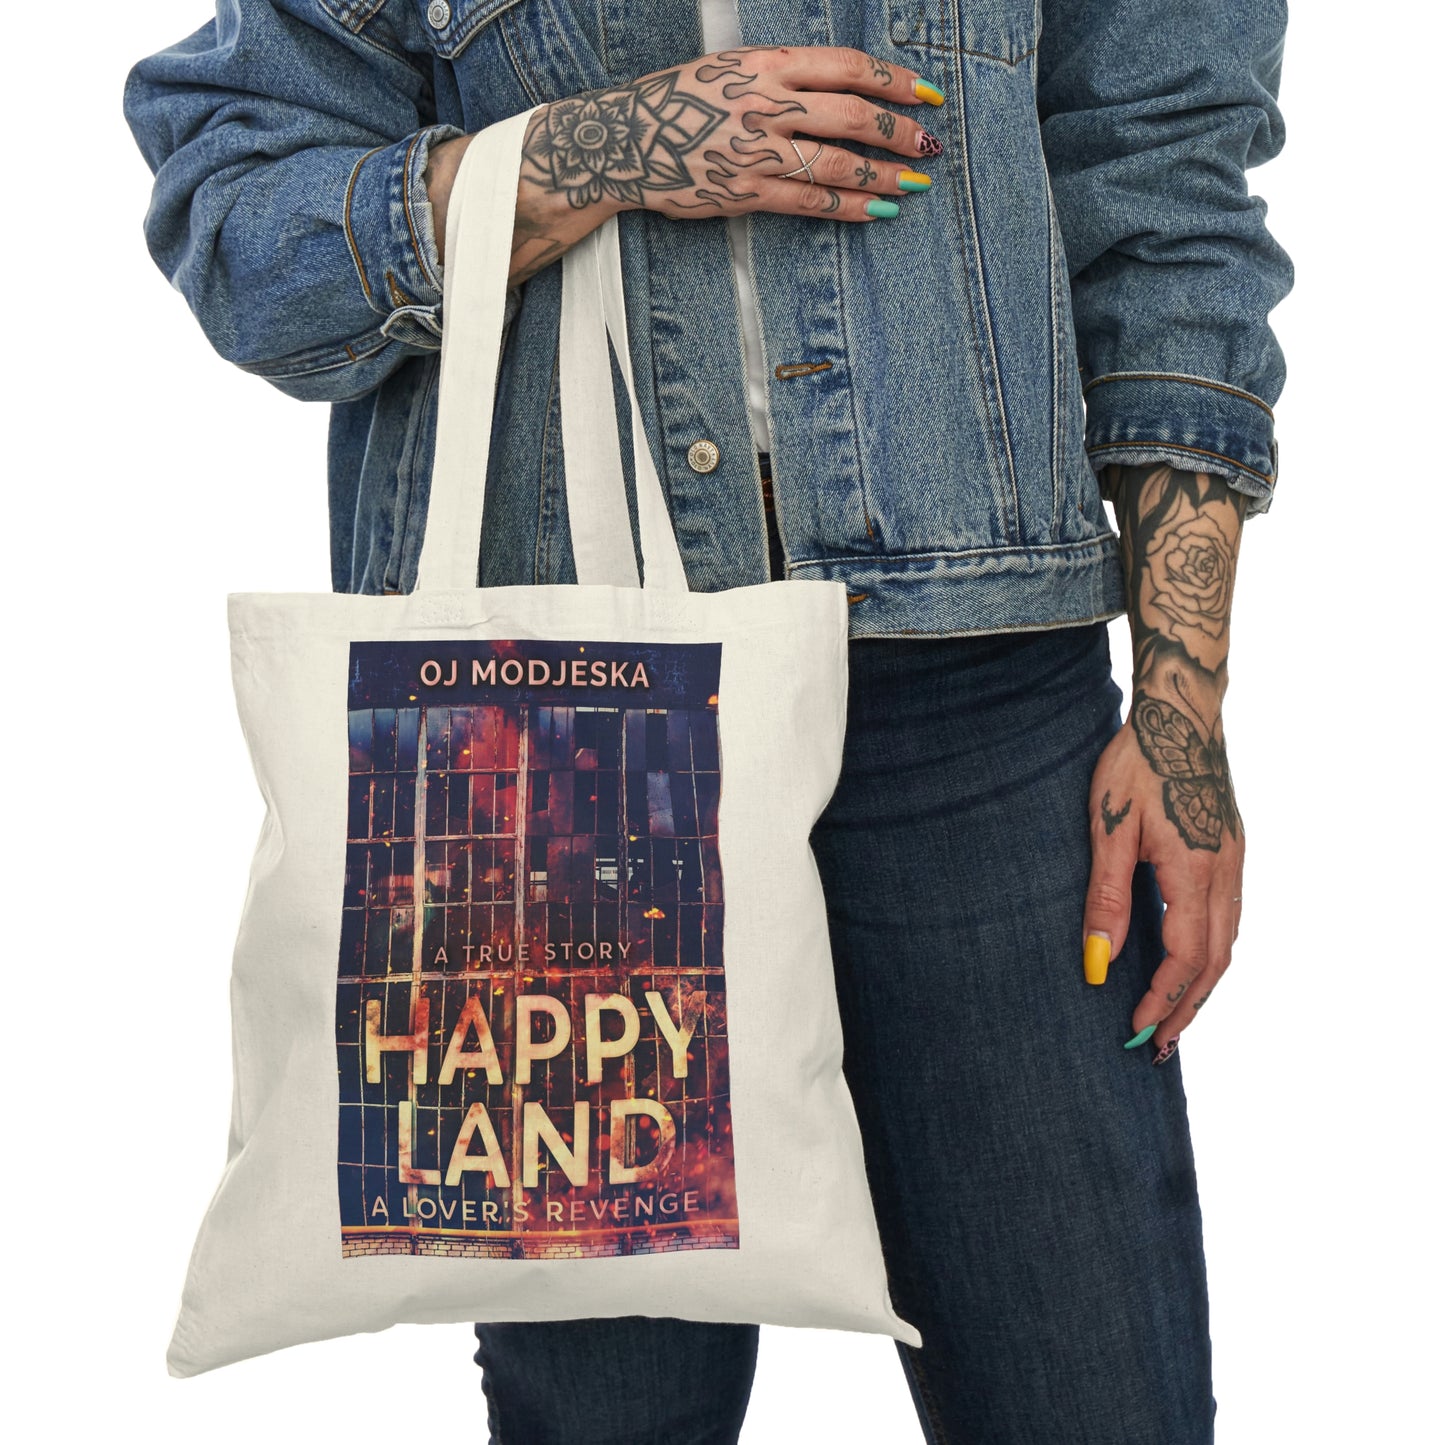 Happy Land - A Lover's Revenge - Natural Tote Bag